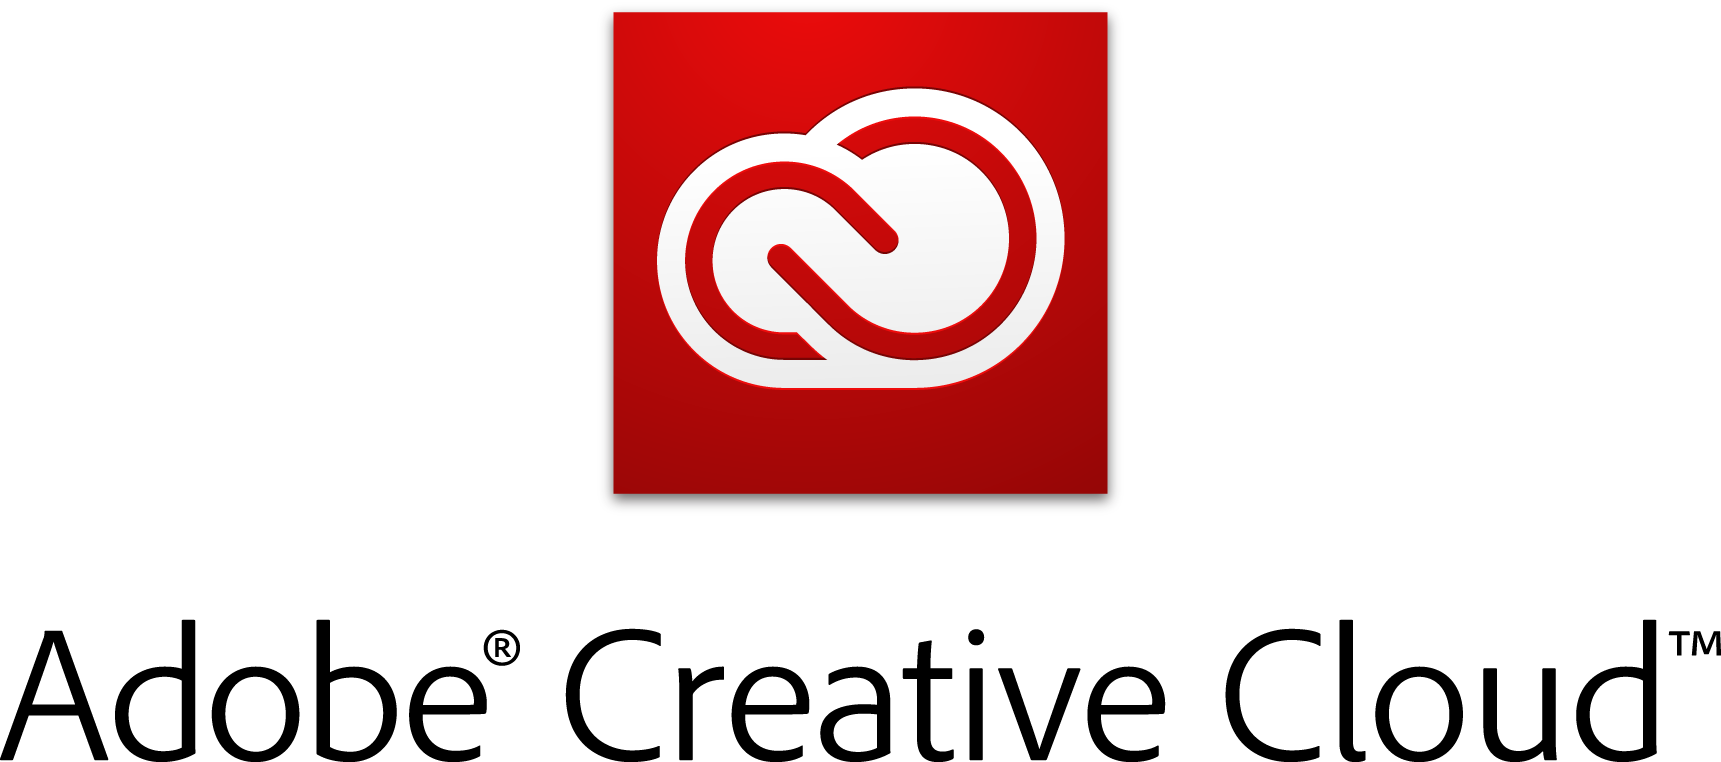 5 Essential Adobe Creative Cloud Tools You Cannot Do - Adobe Creative Suite Logo (1721x762)